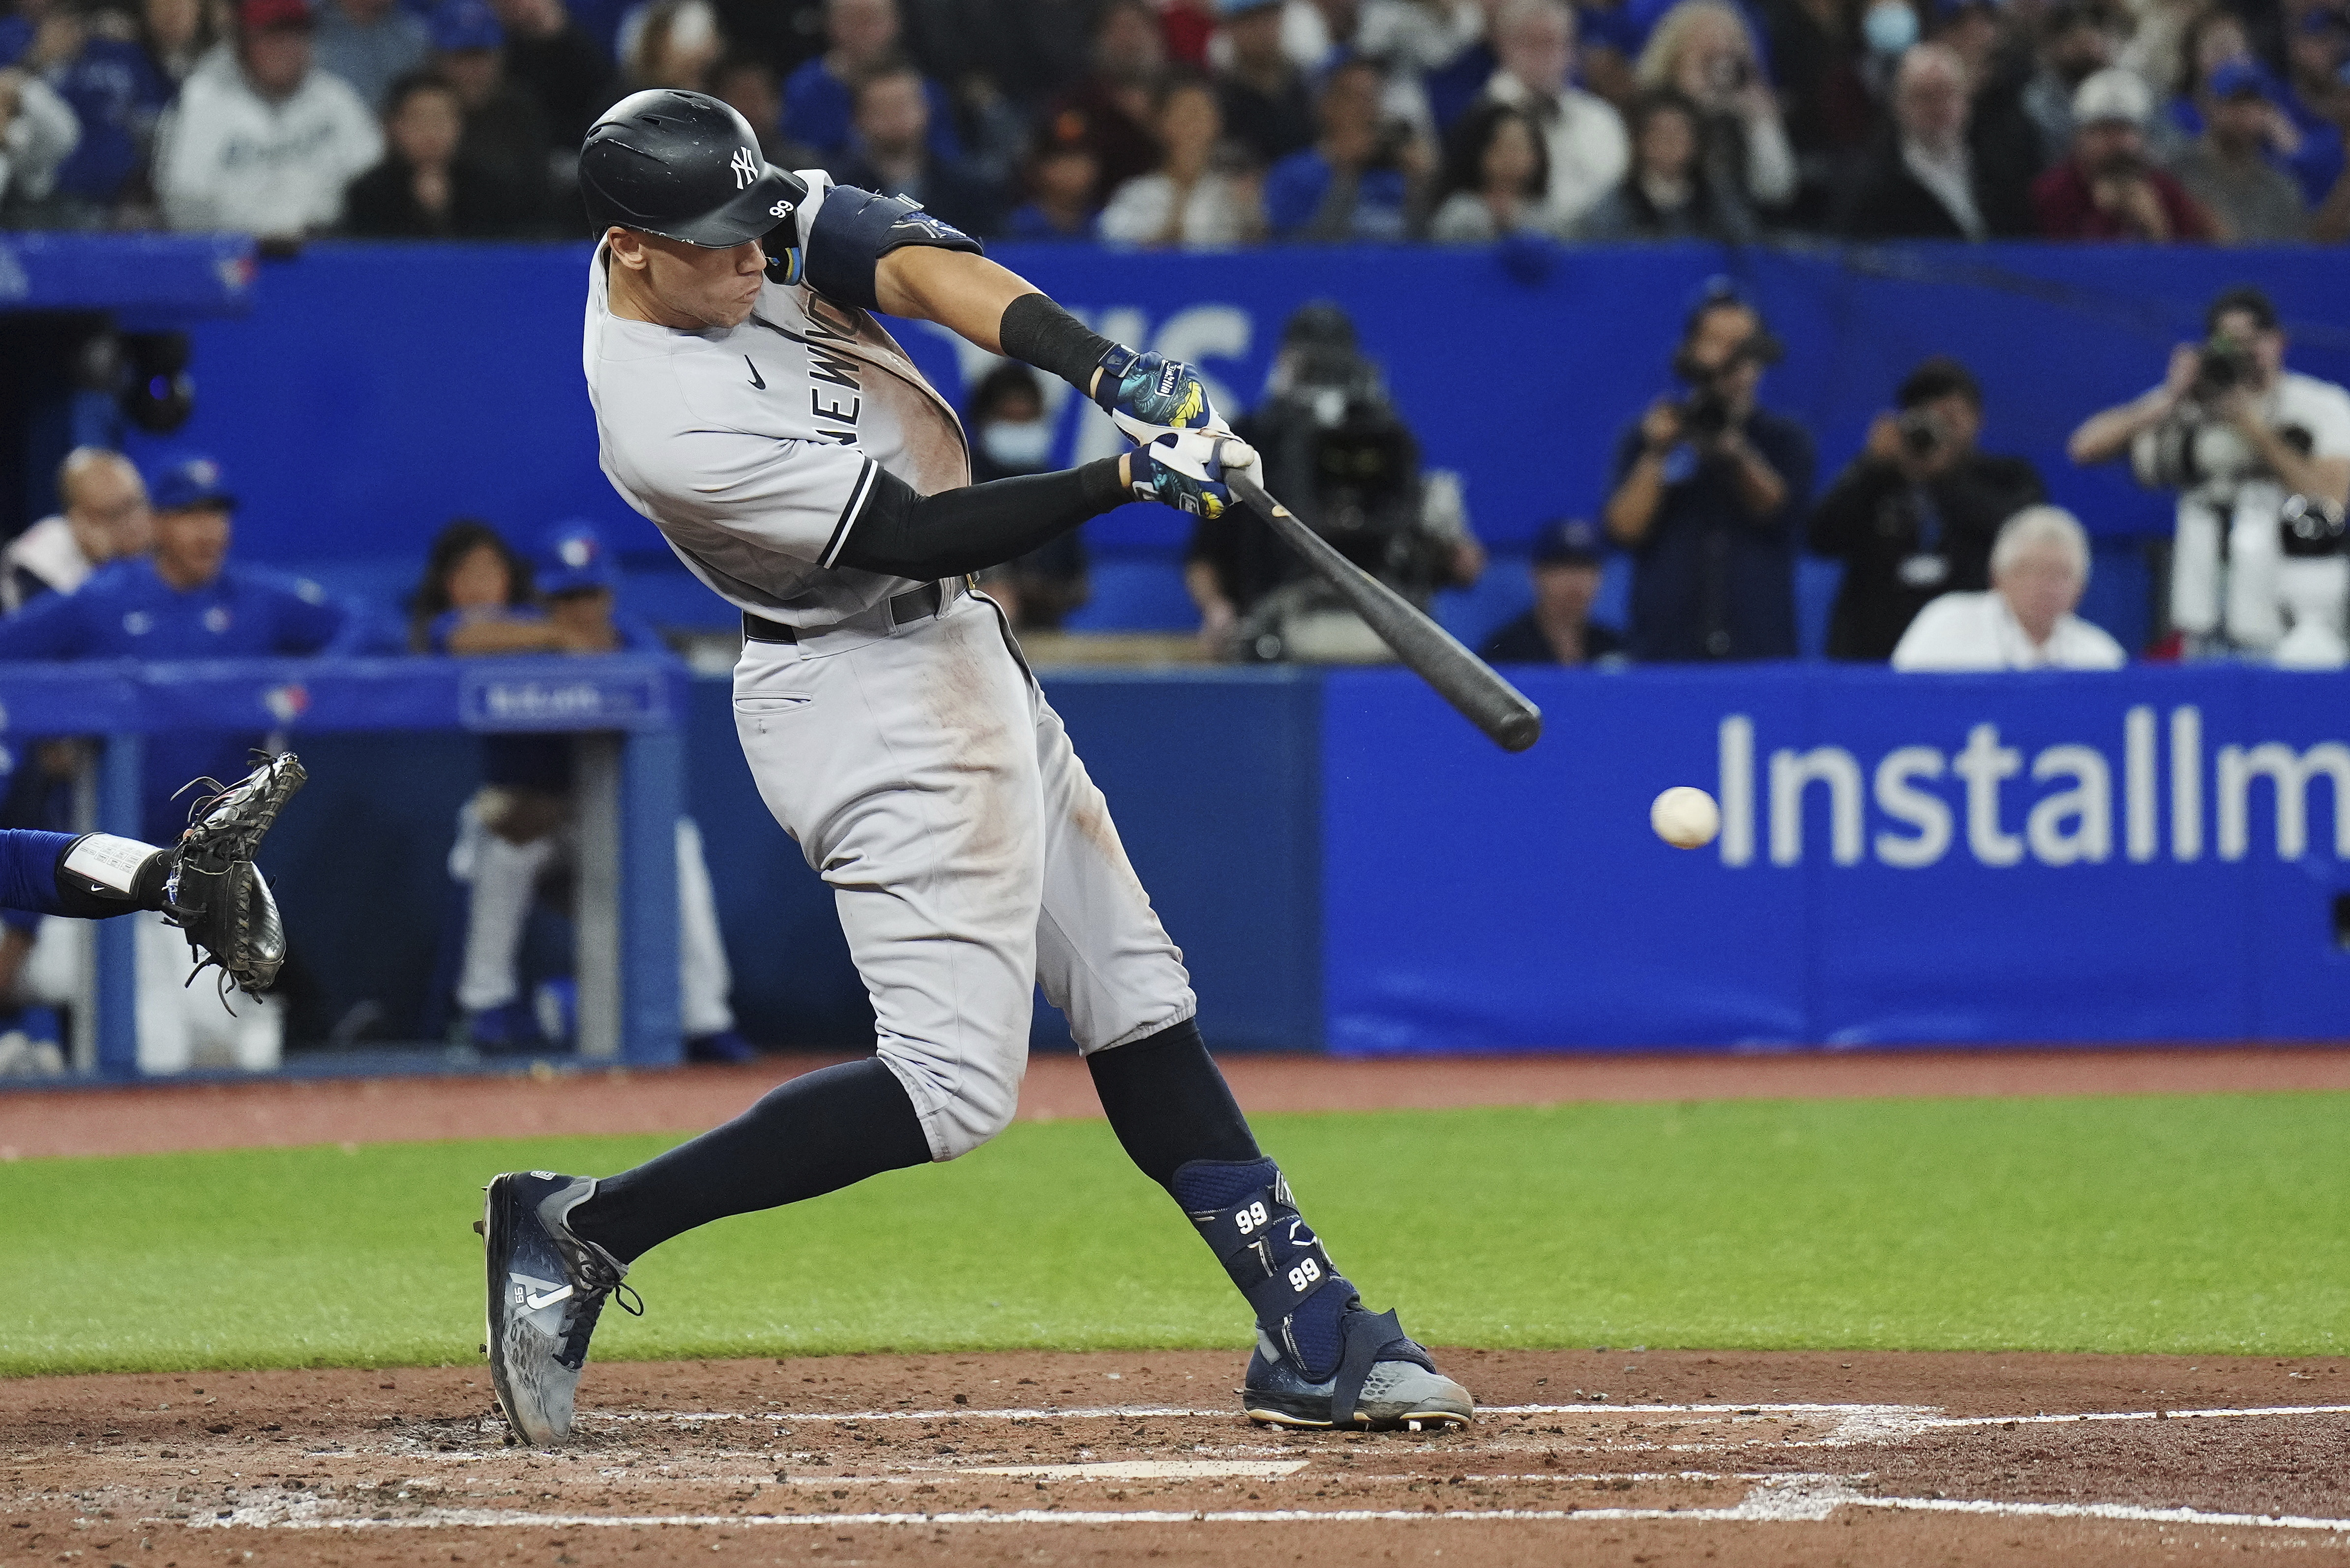 New Bronx Bombers Yankees set MLB franchise HR records with Luke Voit shot